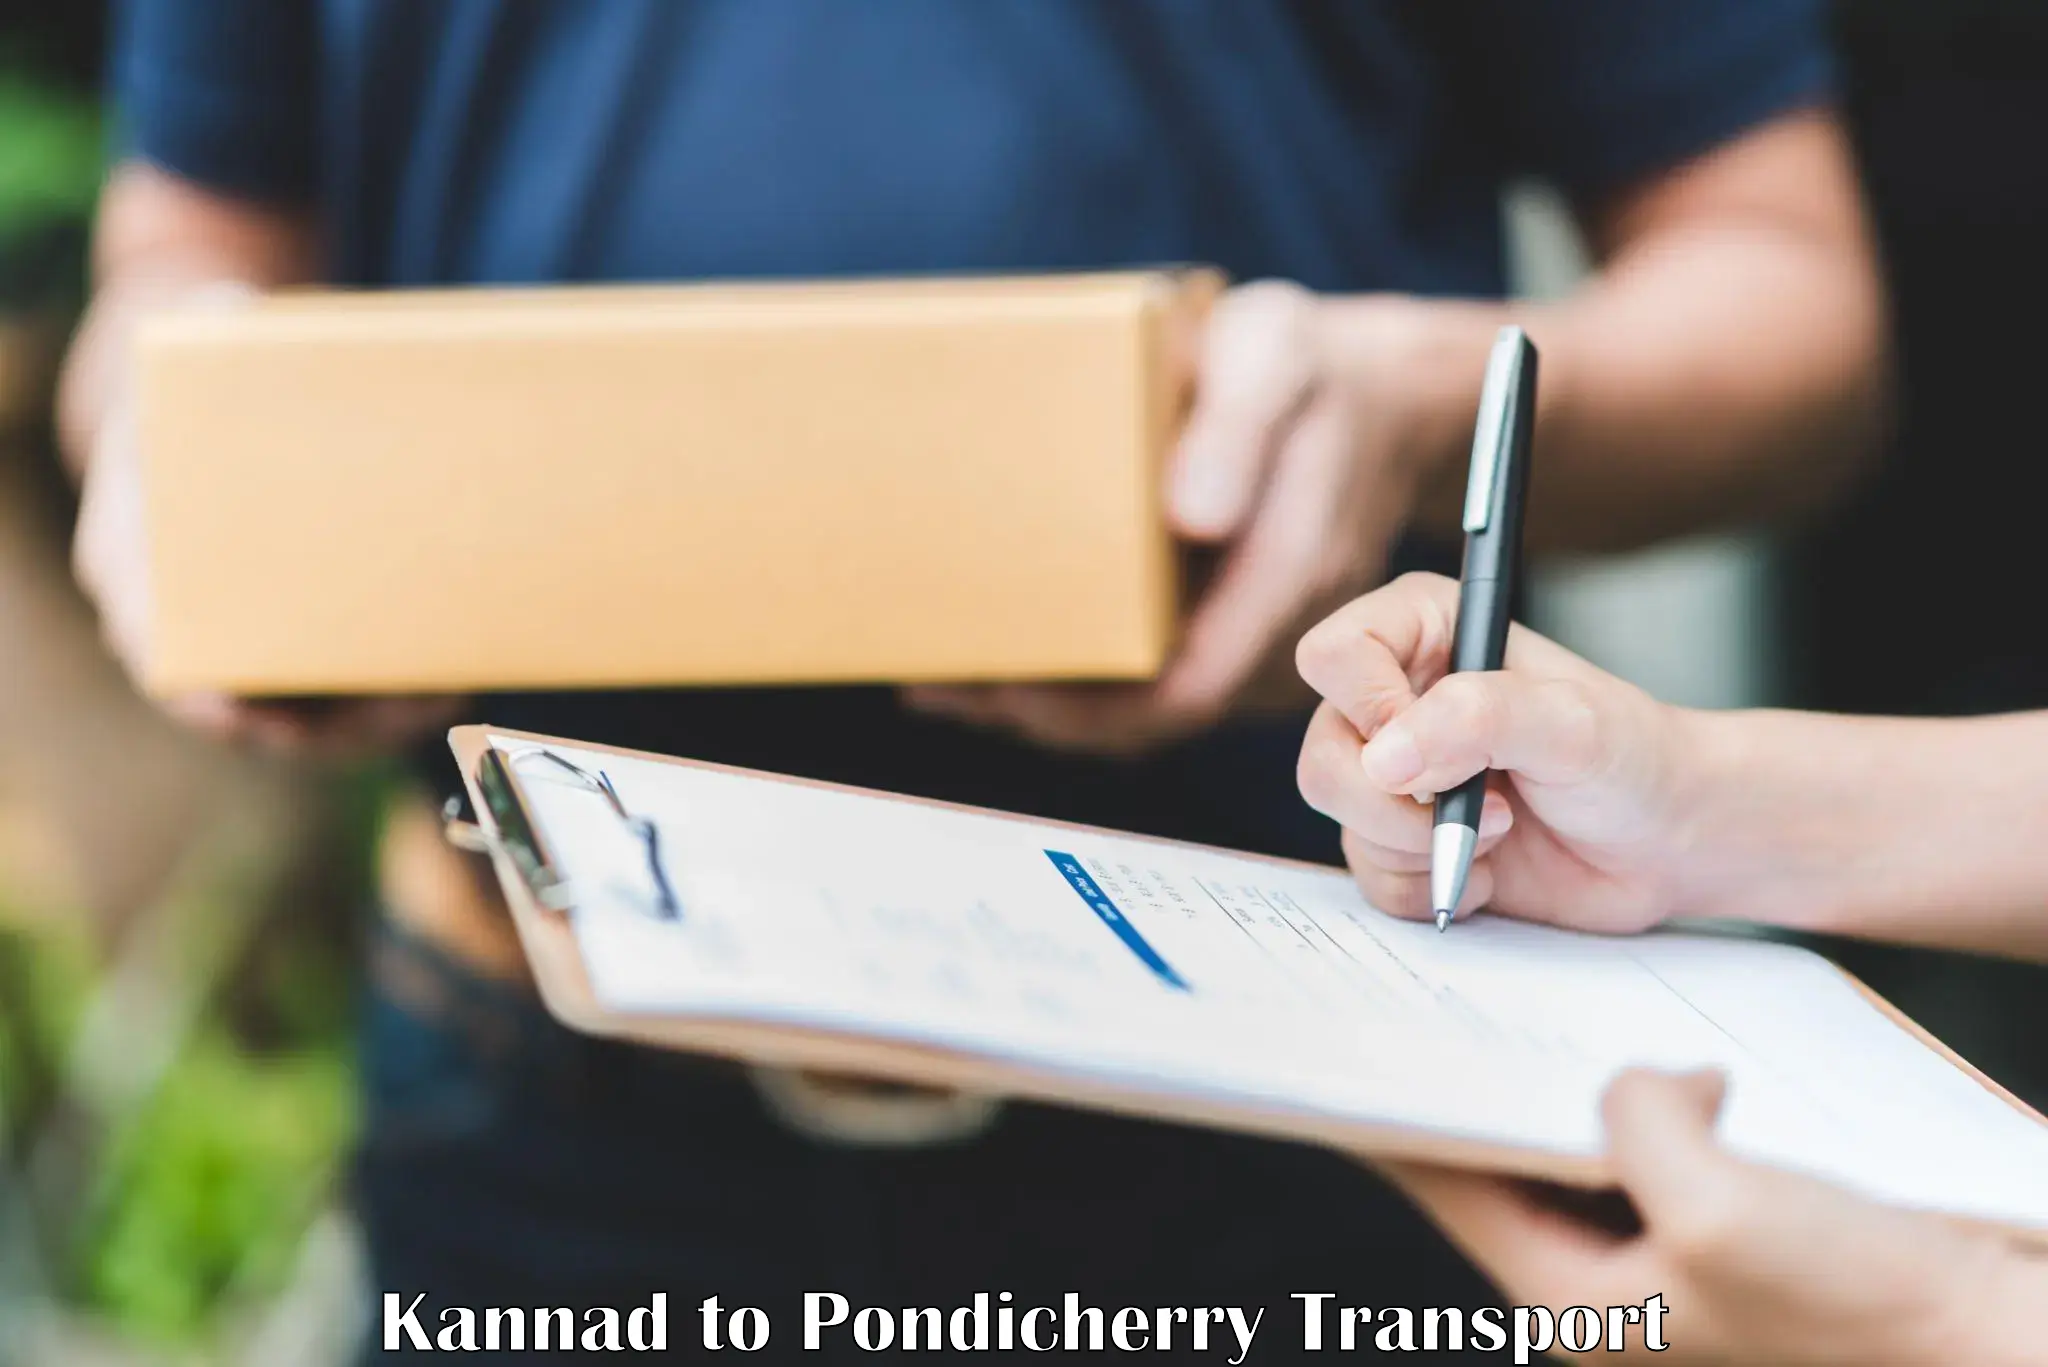 Container transport service Kannad to Pondicherry